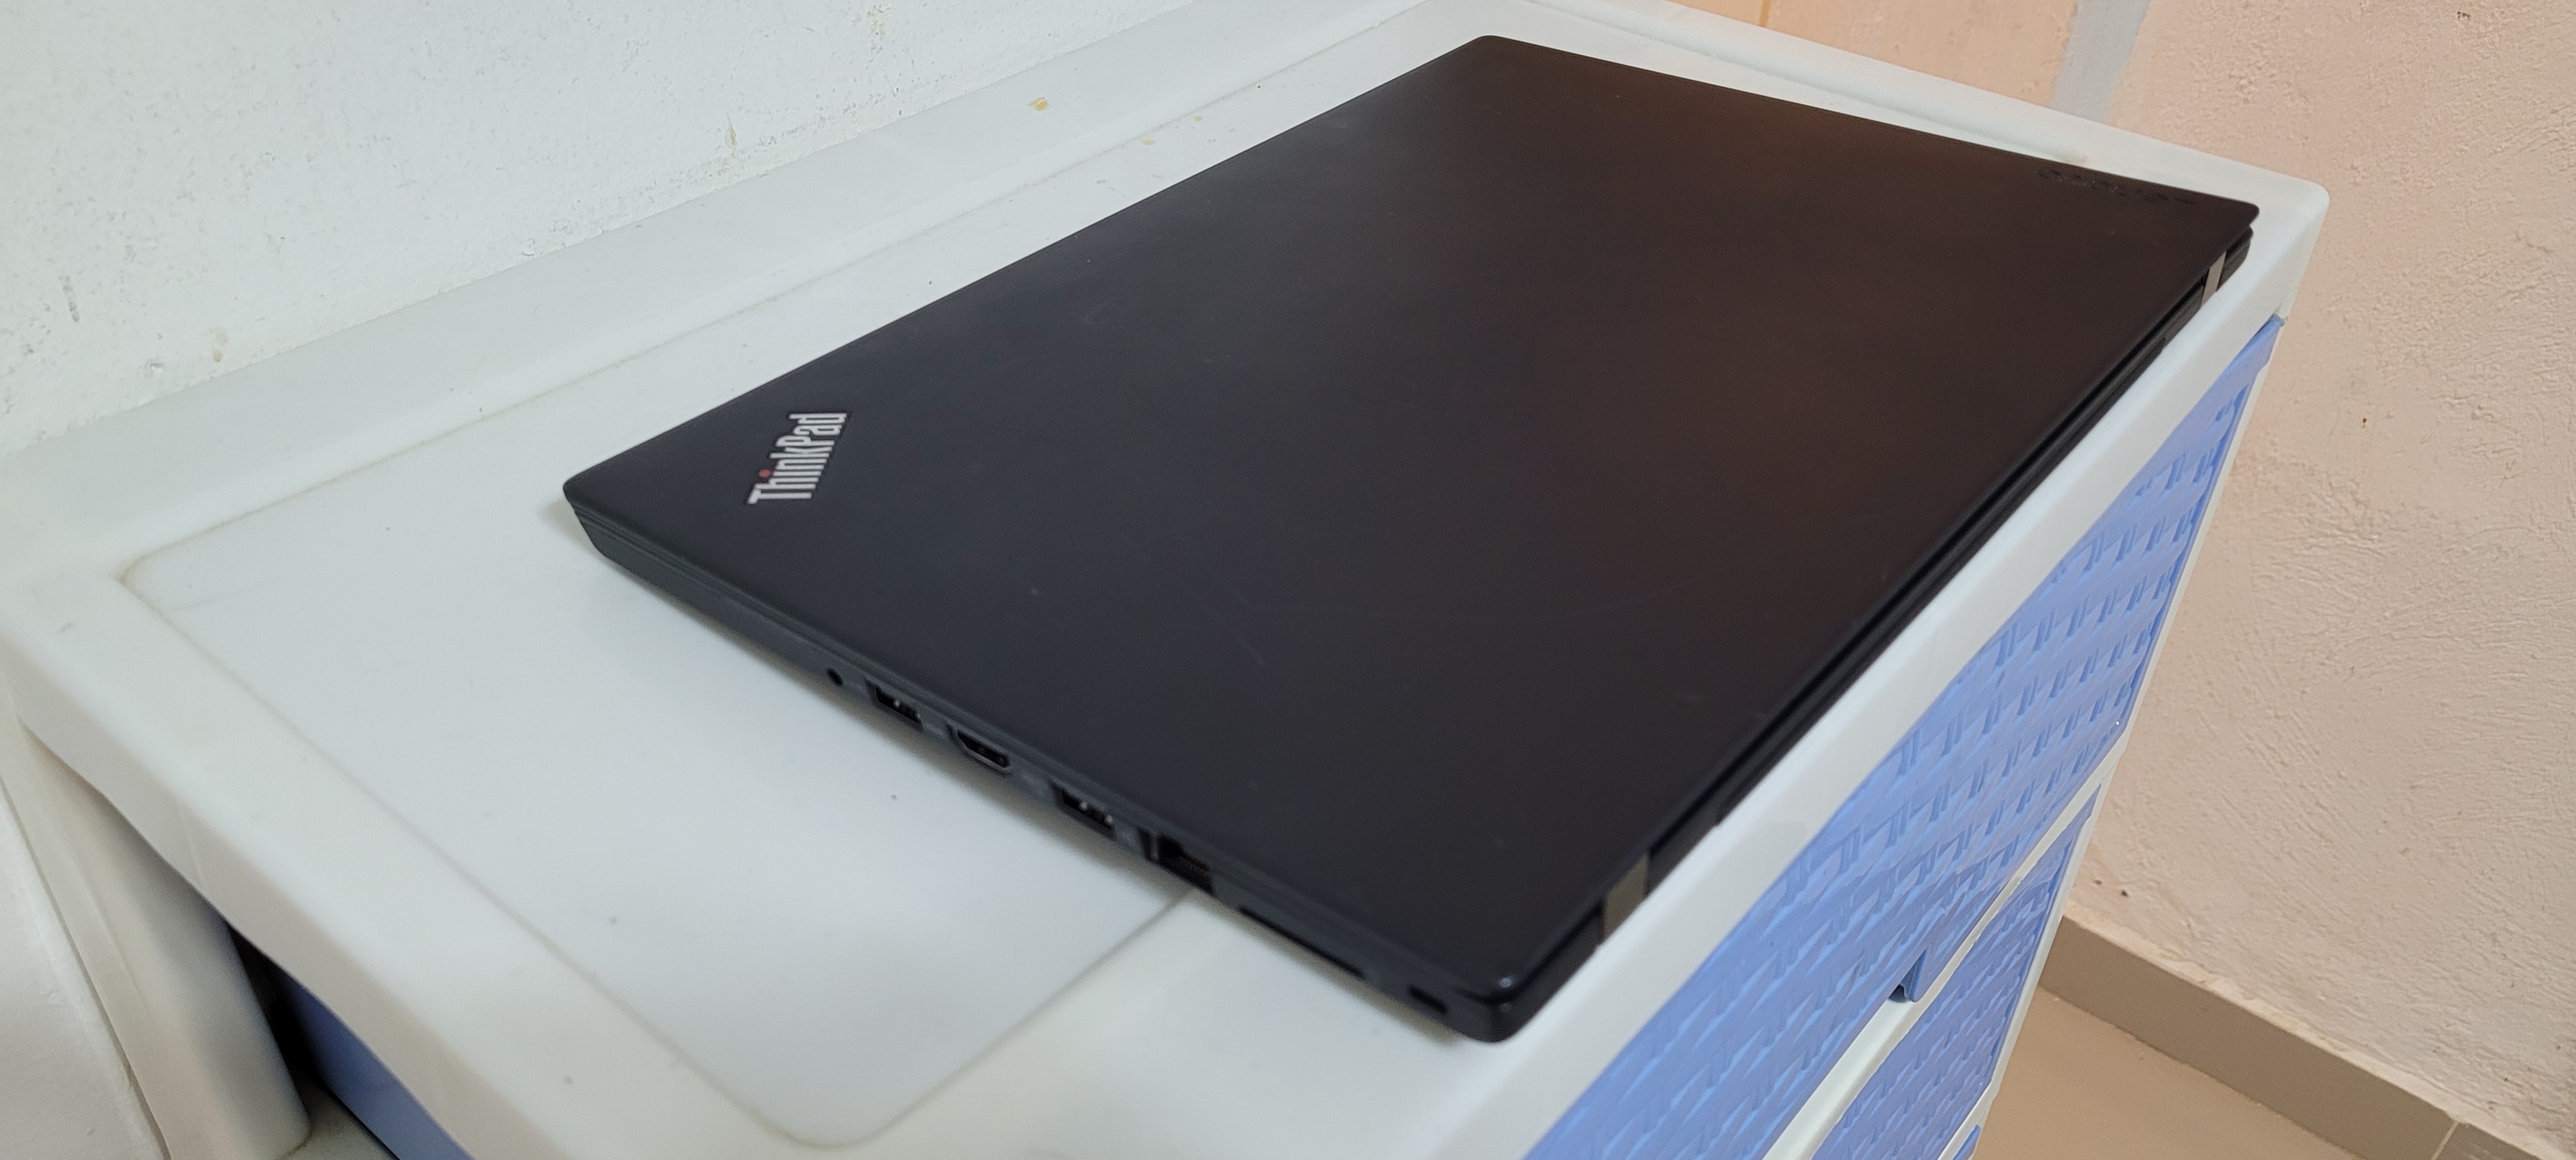 computadoras y laptops - Lenovo T450s 14 Pulg Core i7 Ram 8gb Disco 256gb SSD Solido New 2